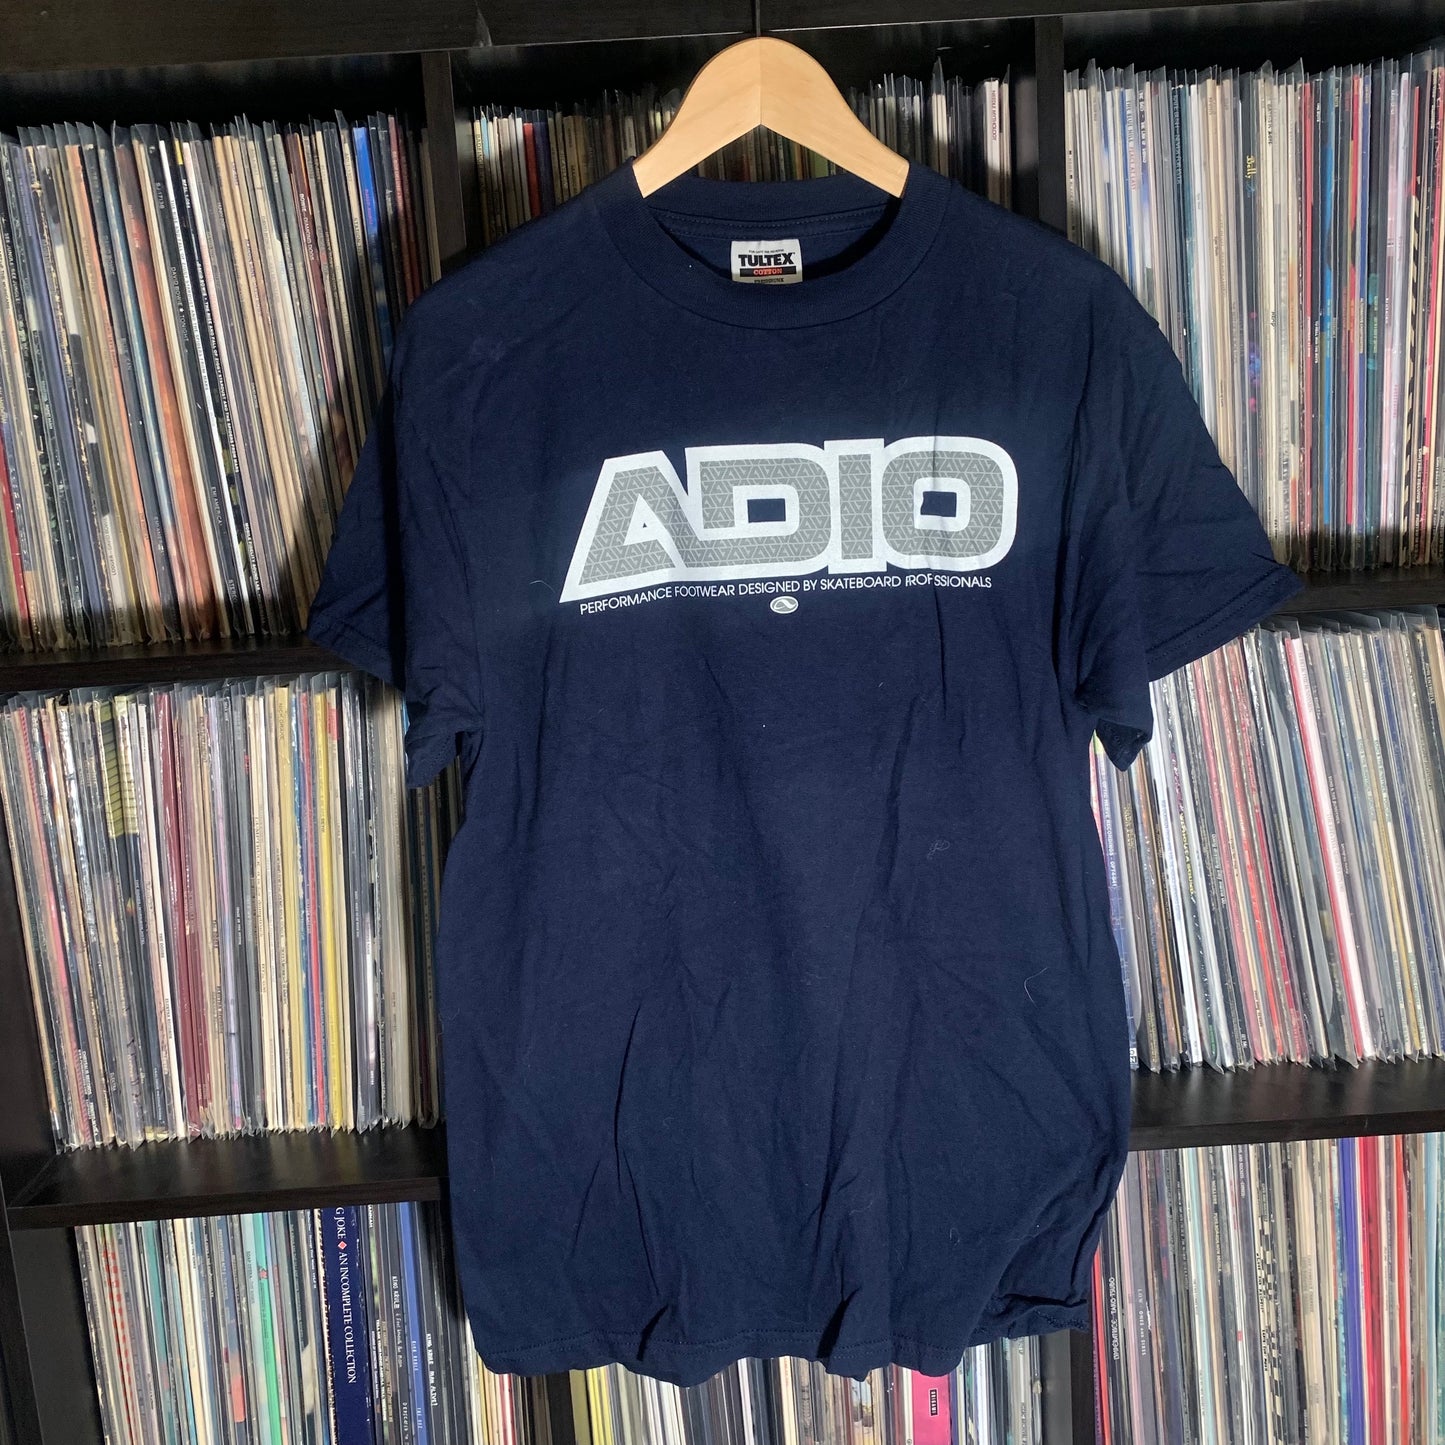 Adio Shoes Shirt Medium